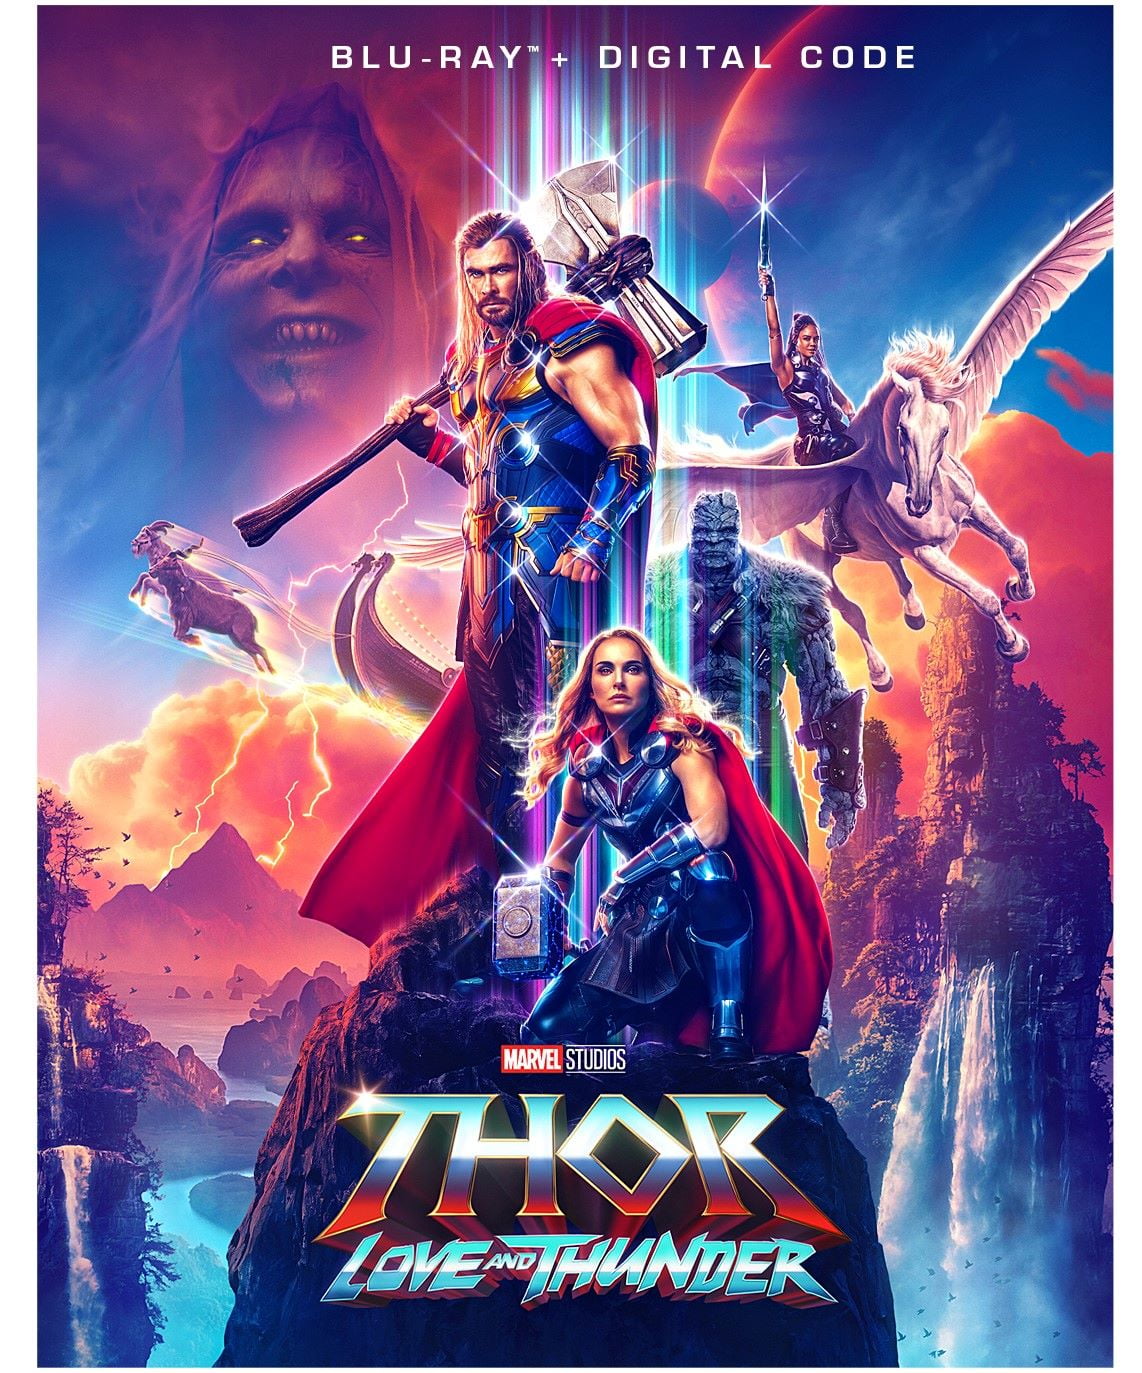 Thor: Love and Thunder (Blu-ray + Digital Code)